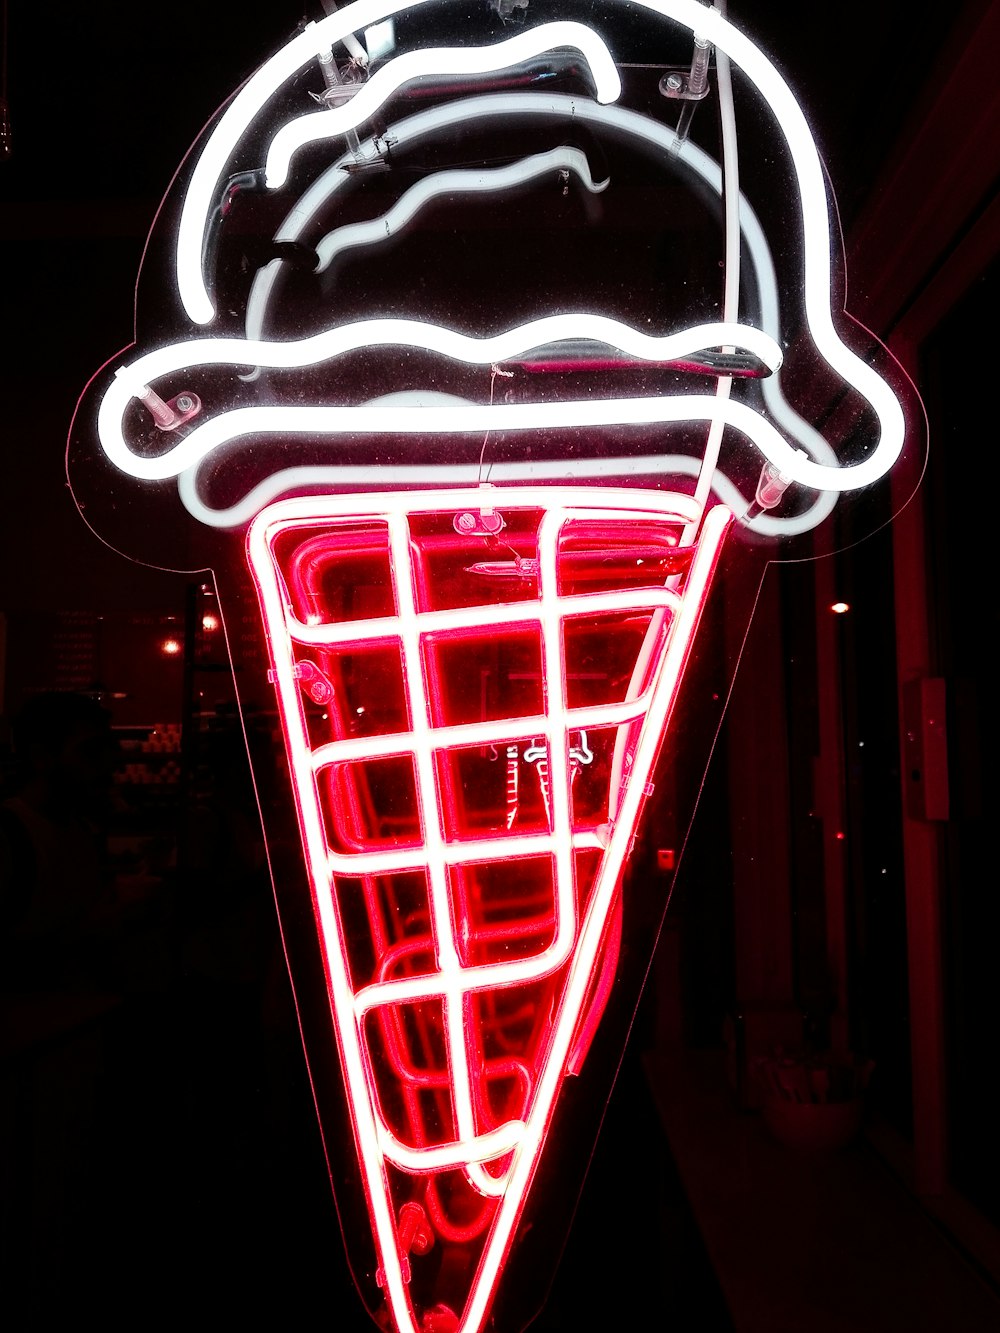 Insegne al neon per gelati